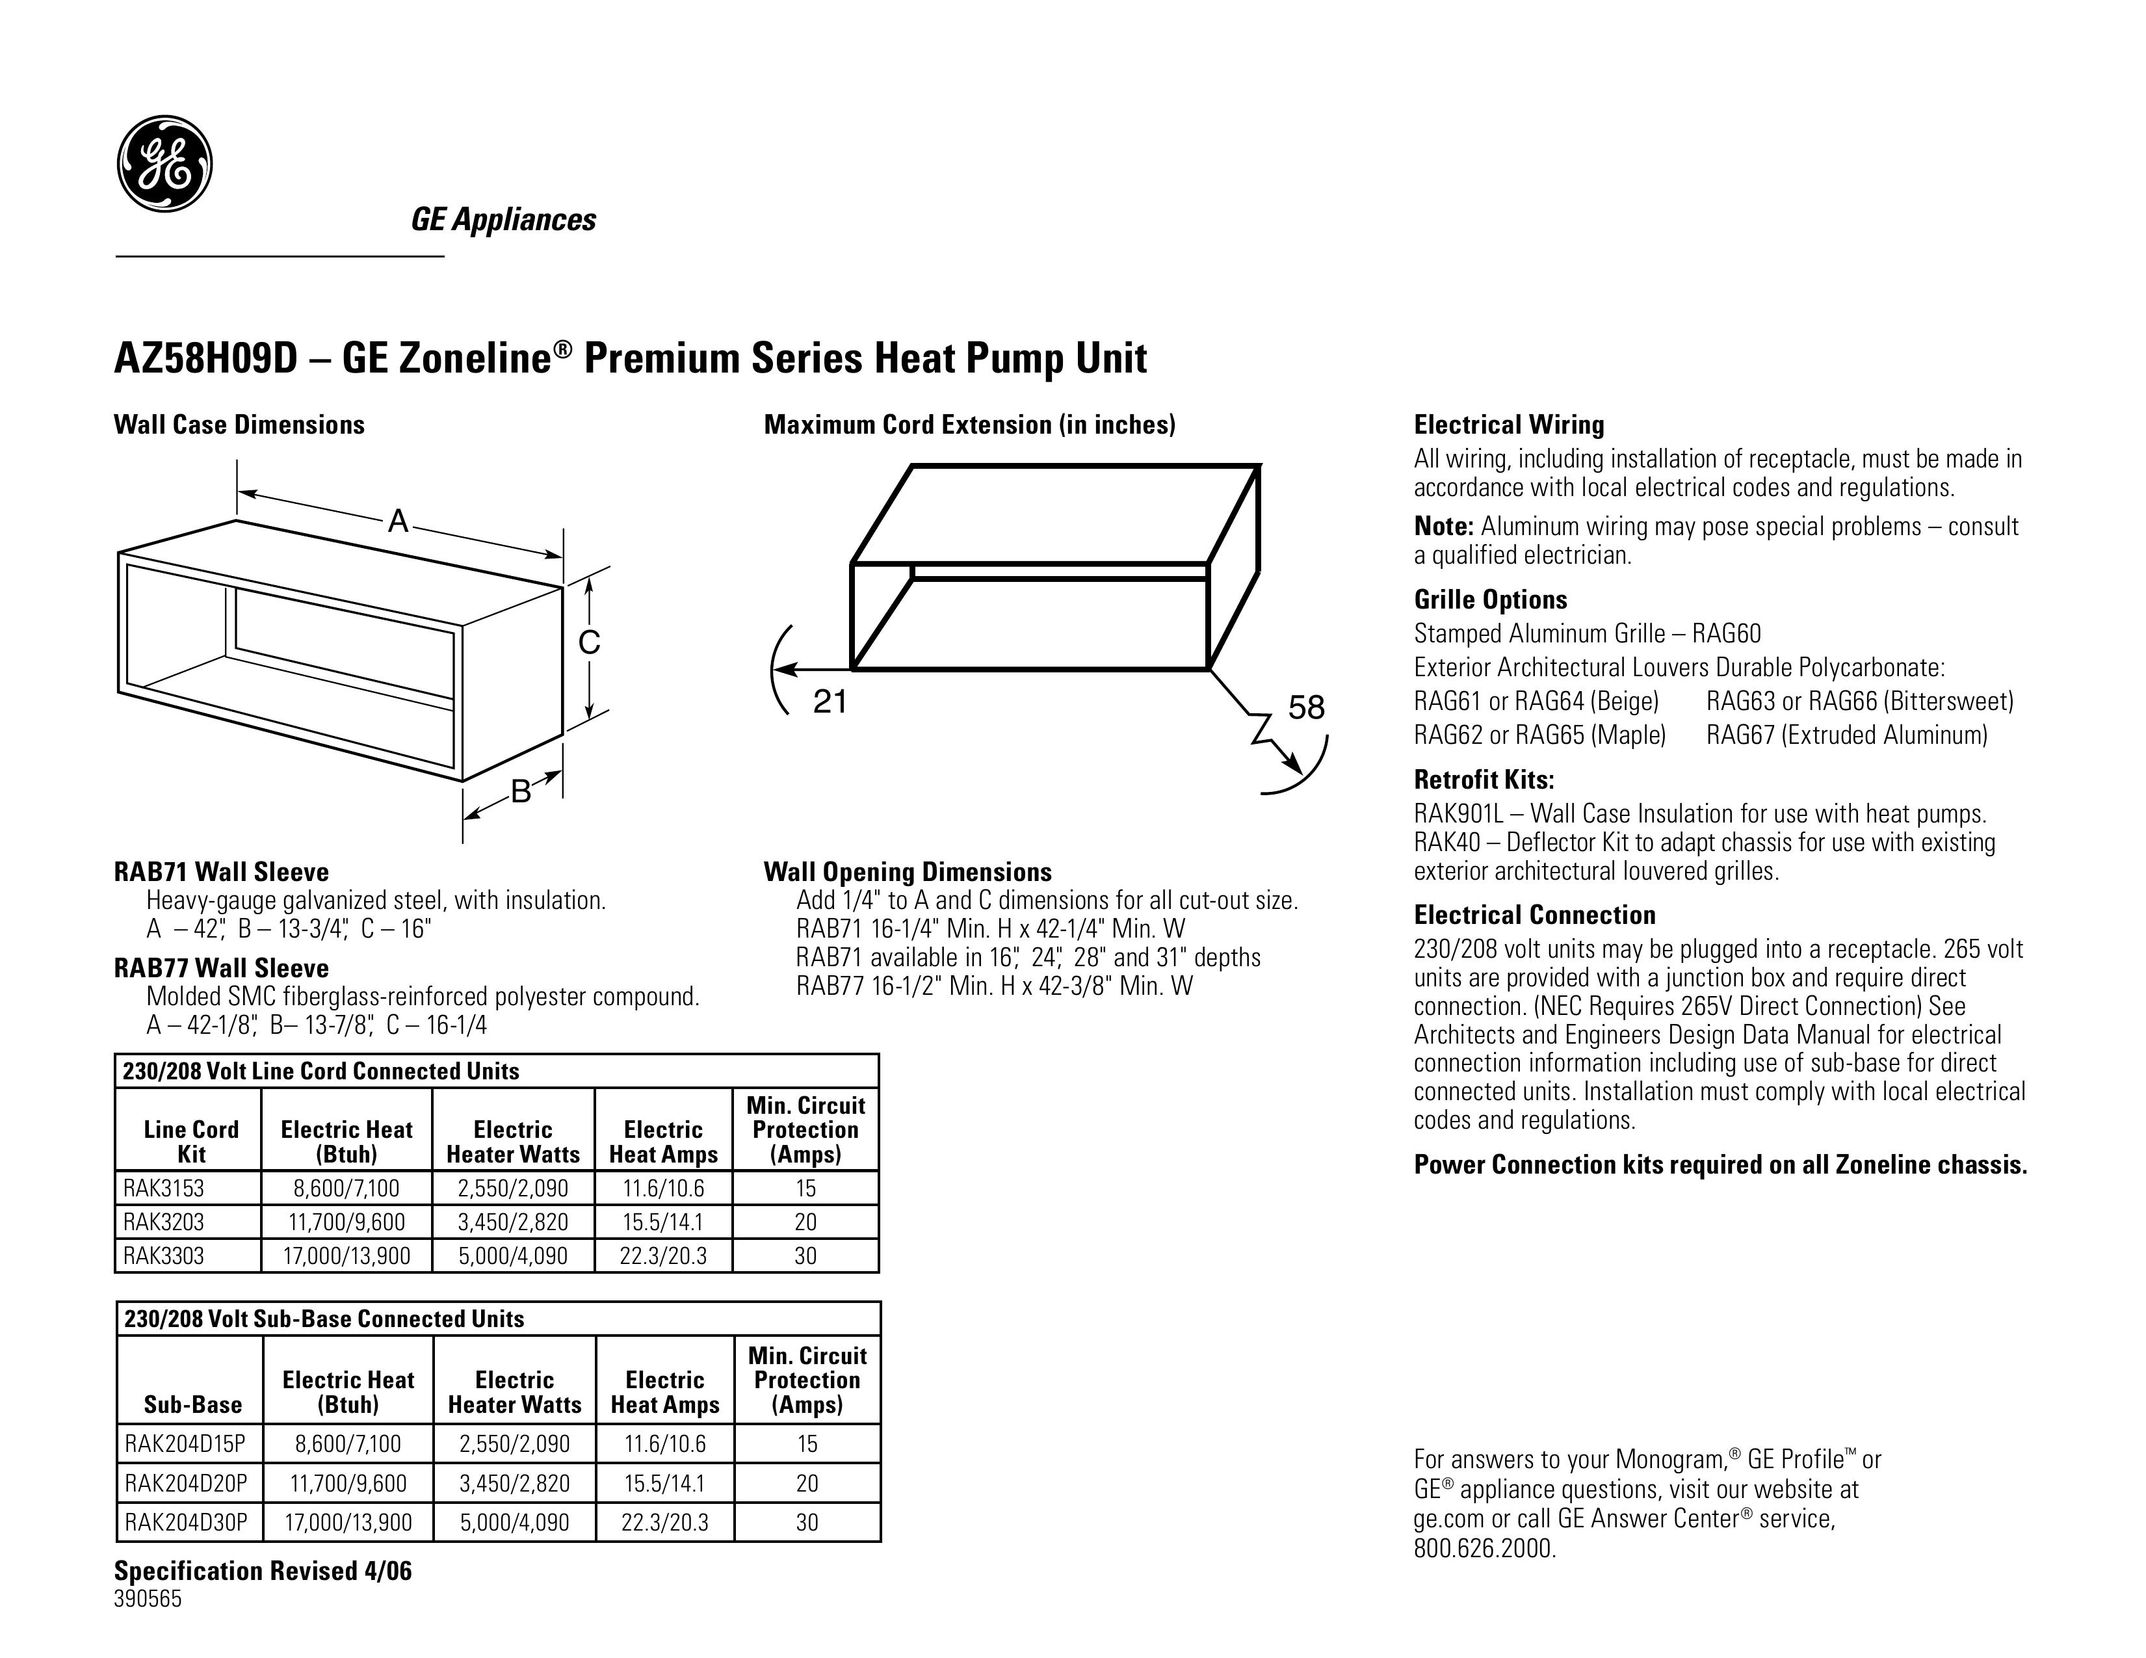 GE AZ58H09DAC Heat Pump User Manual